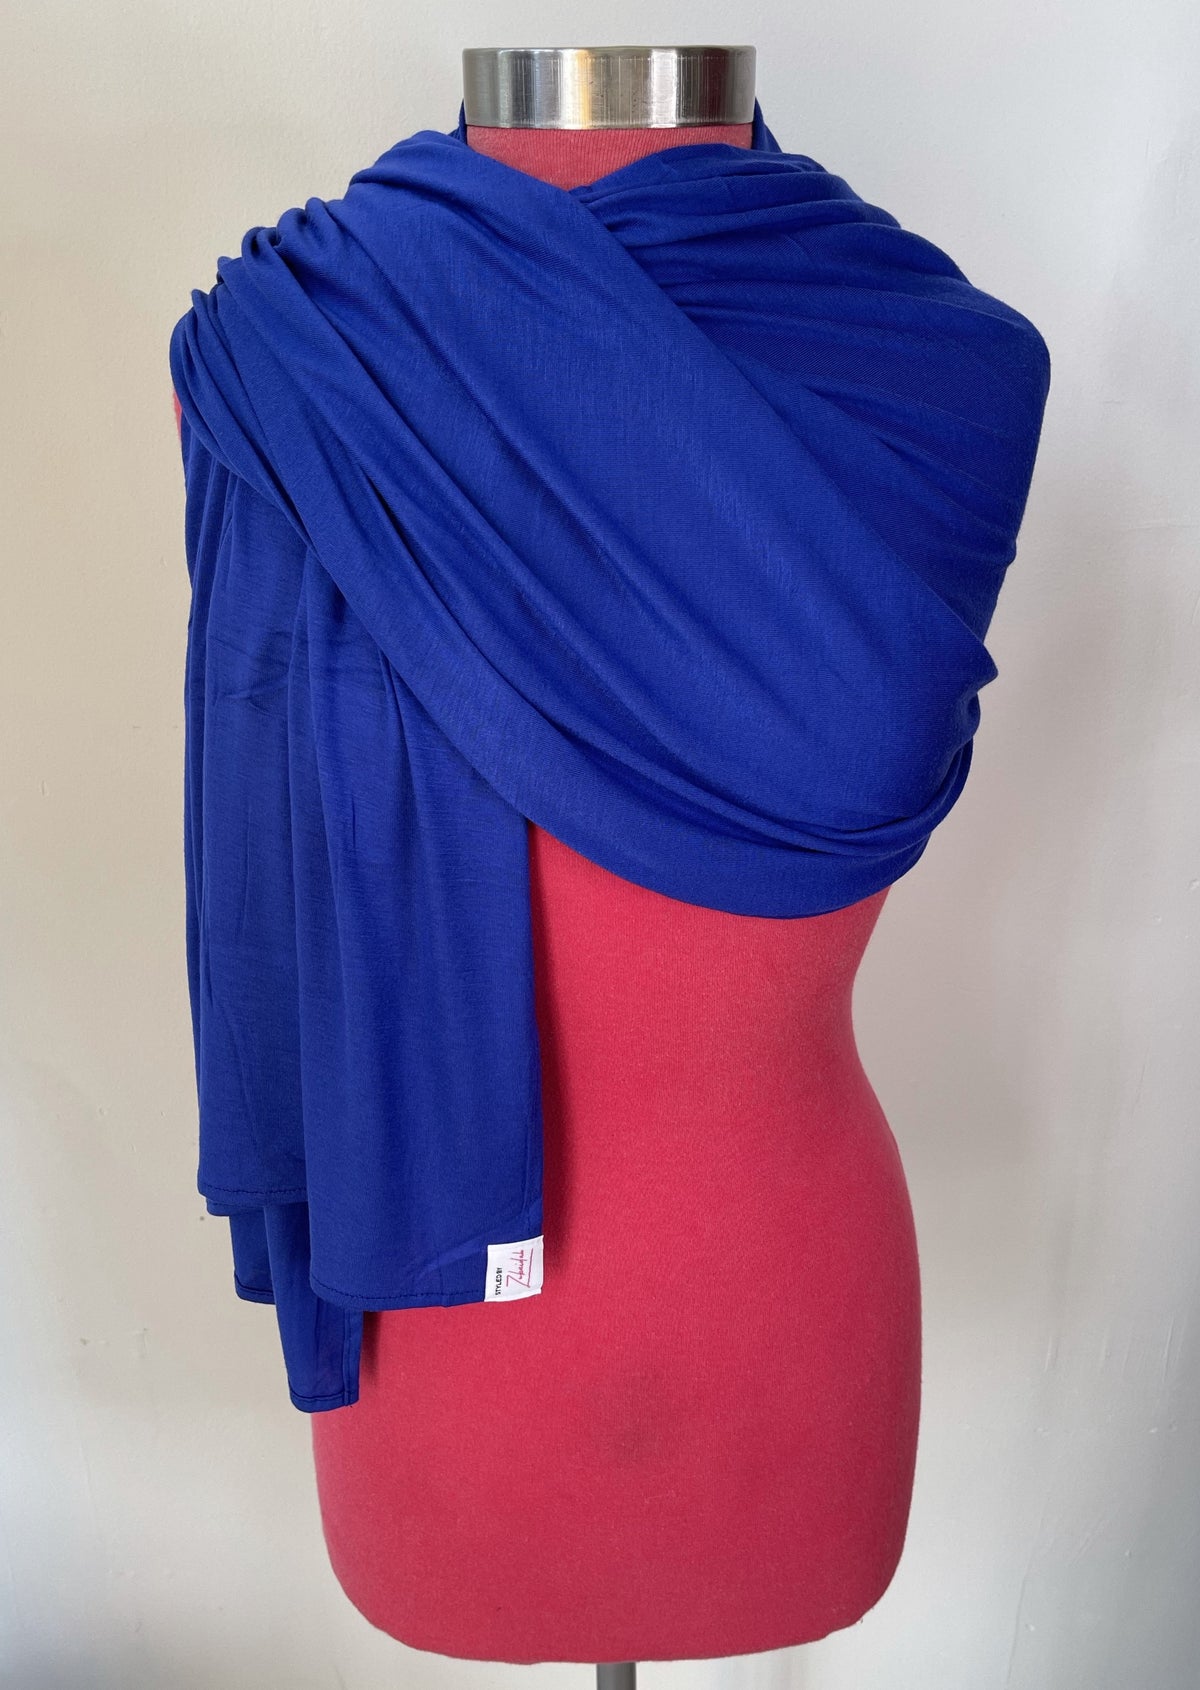 Cobalt - XL Jersey Knit Hijab